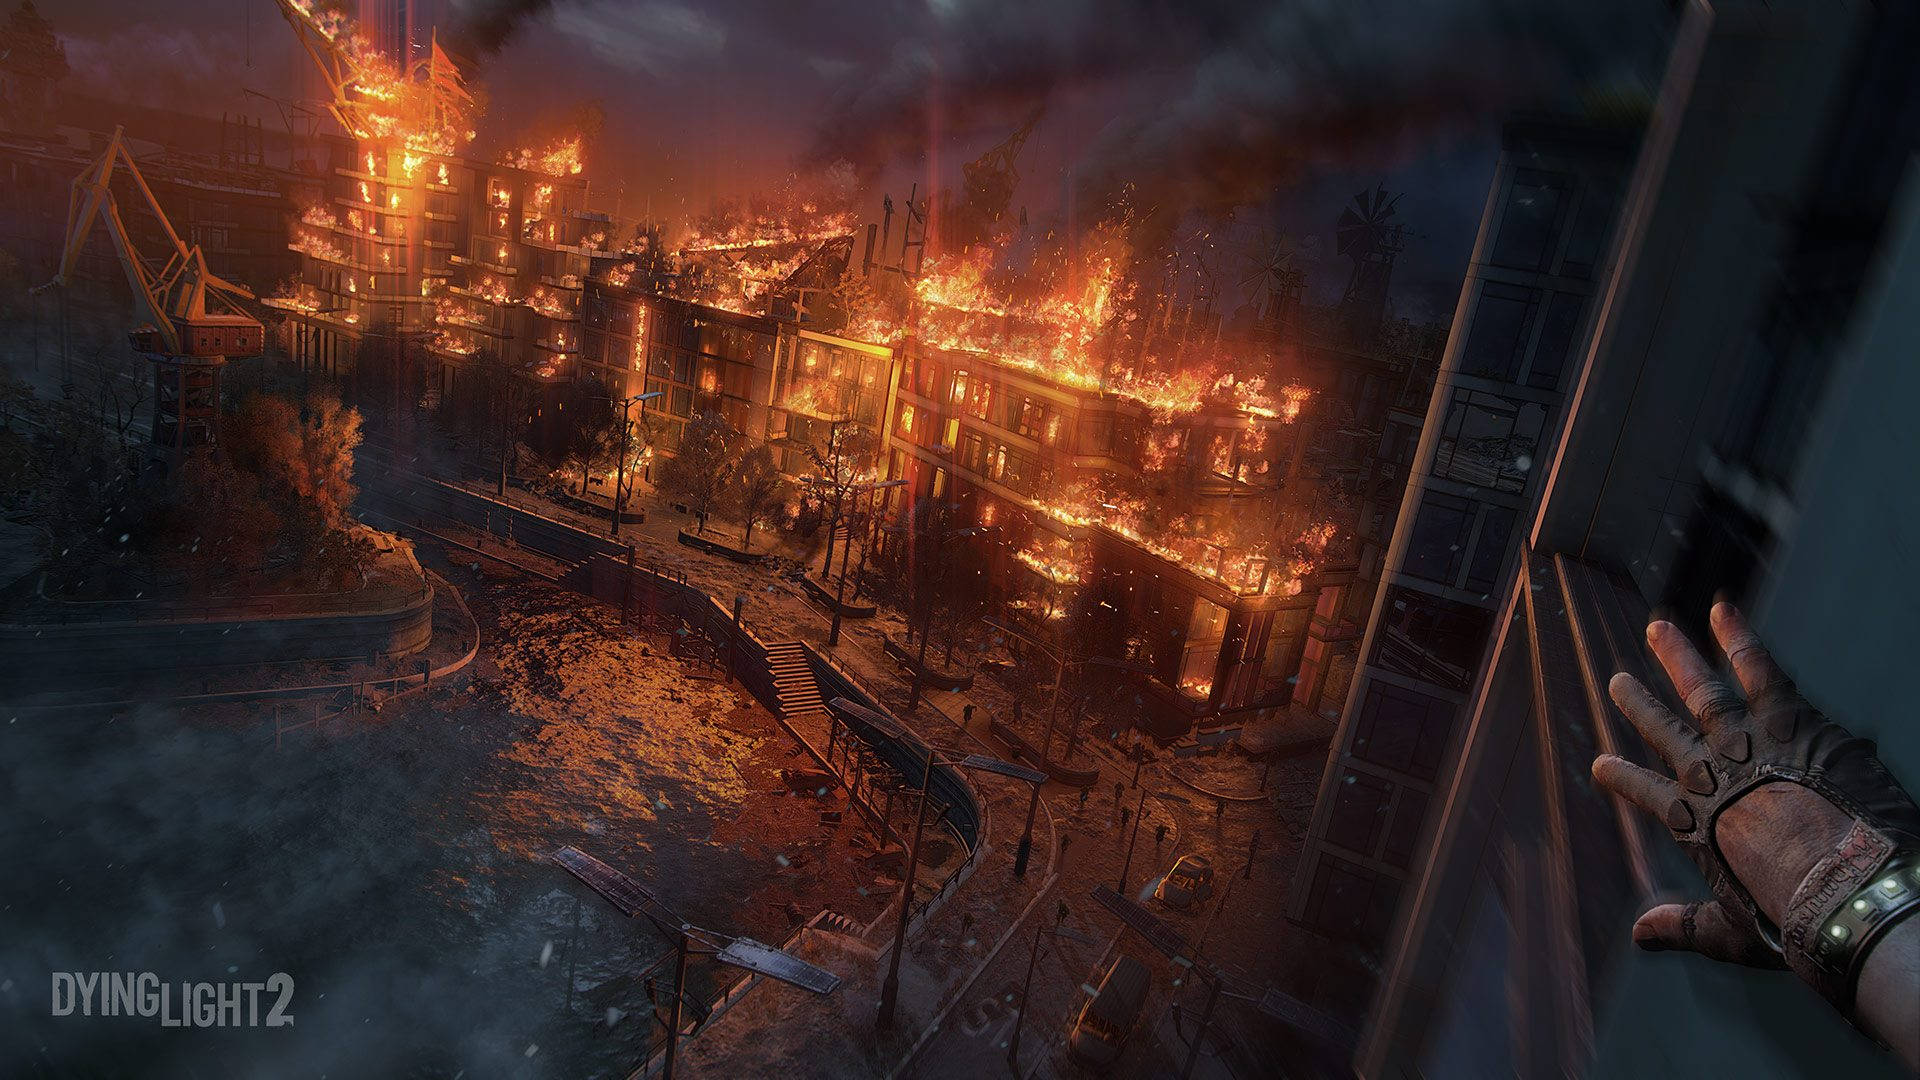 Dying Light 2: Stunning Image Of A Burning City Background